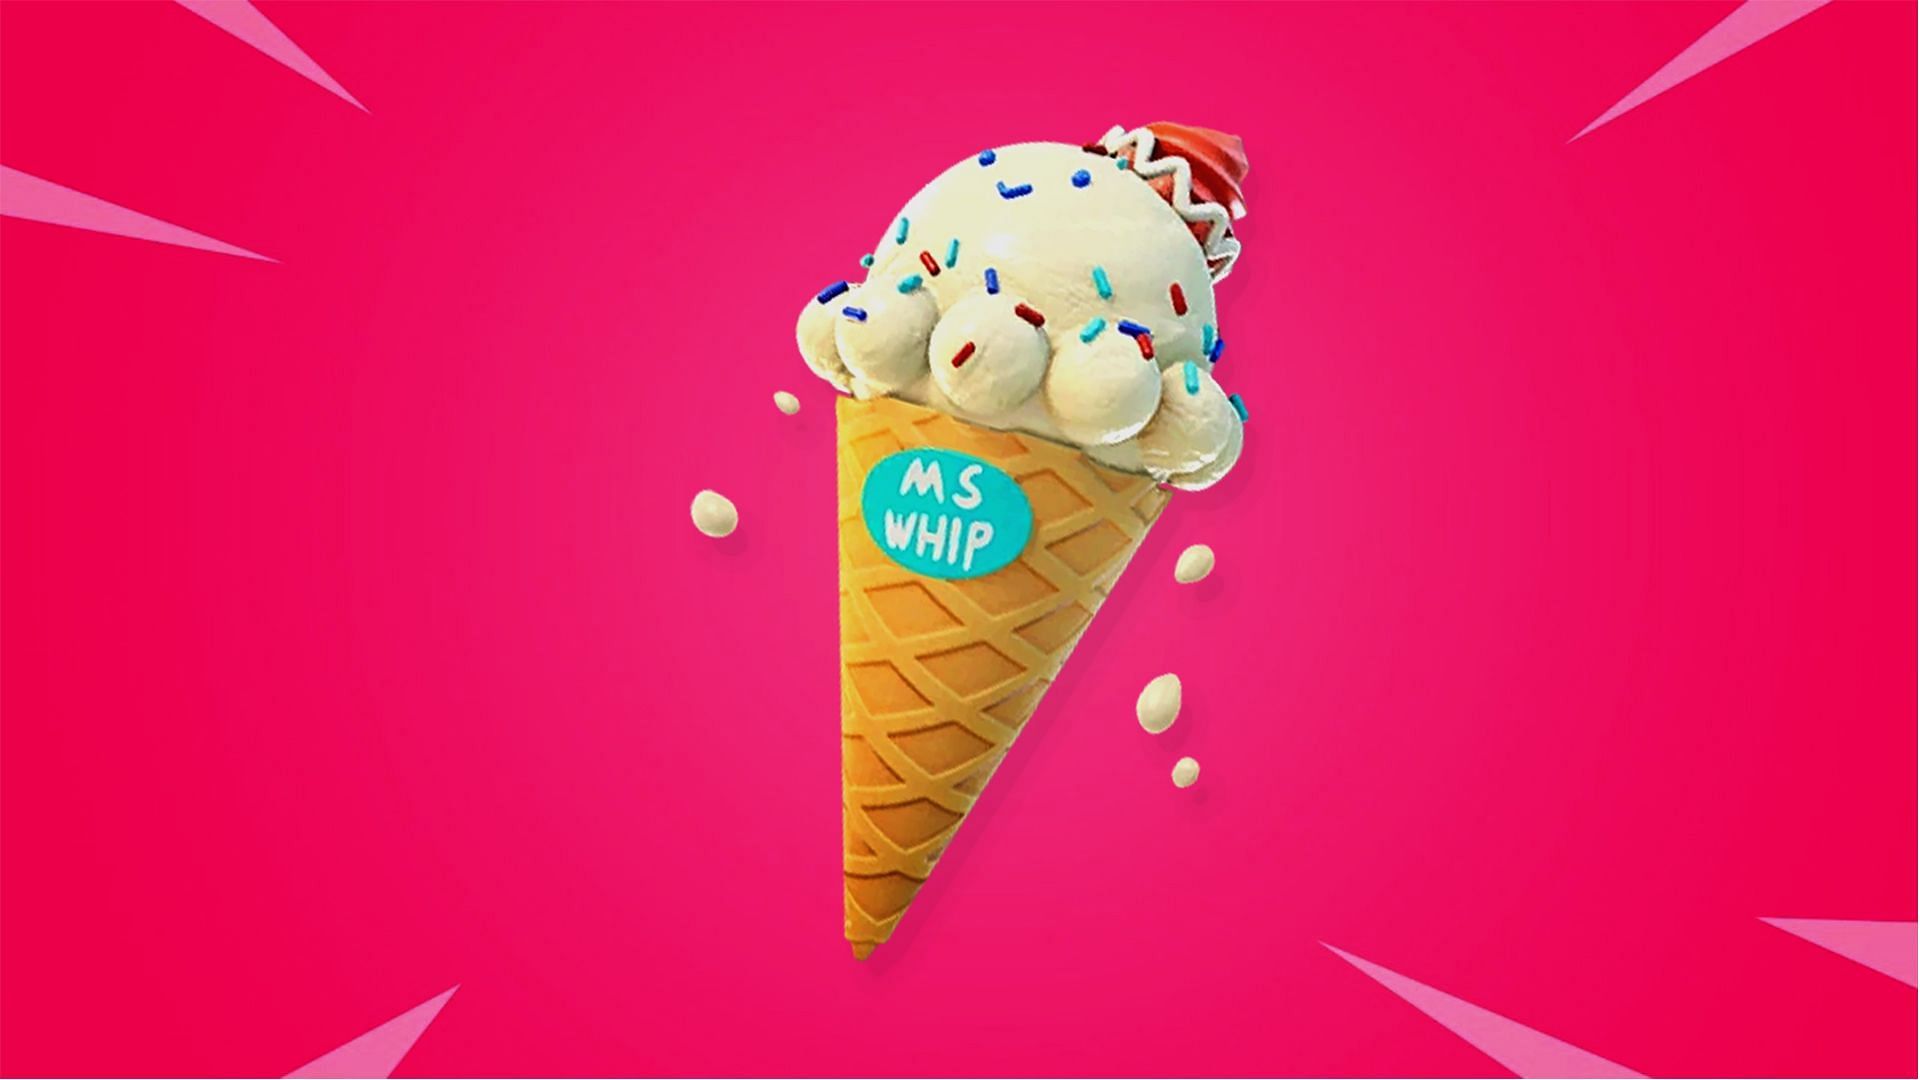 Players can now enjoy Ice Cream in Fortnite (Image via Sportskeeda / Epic Games)